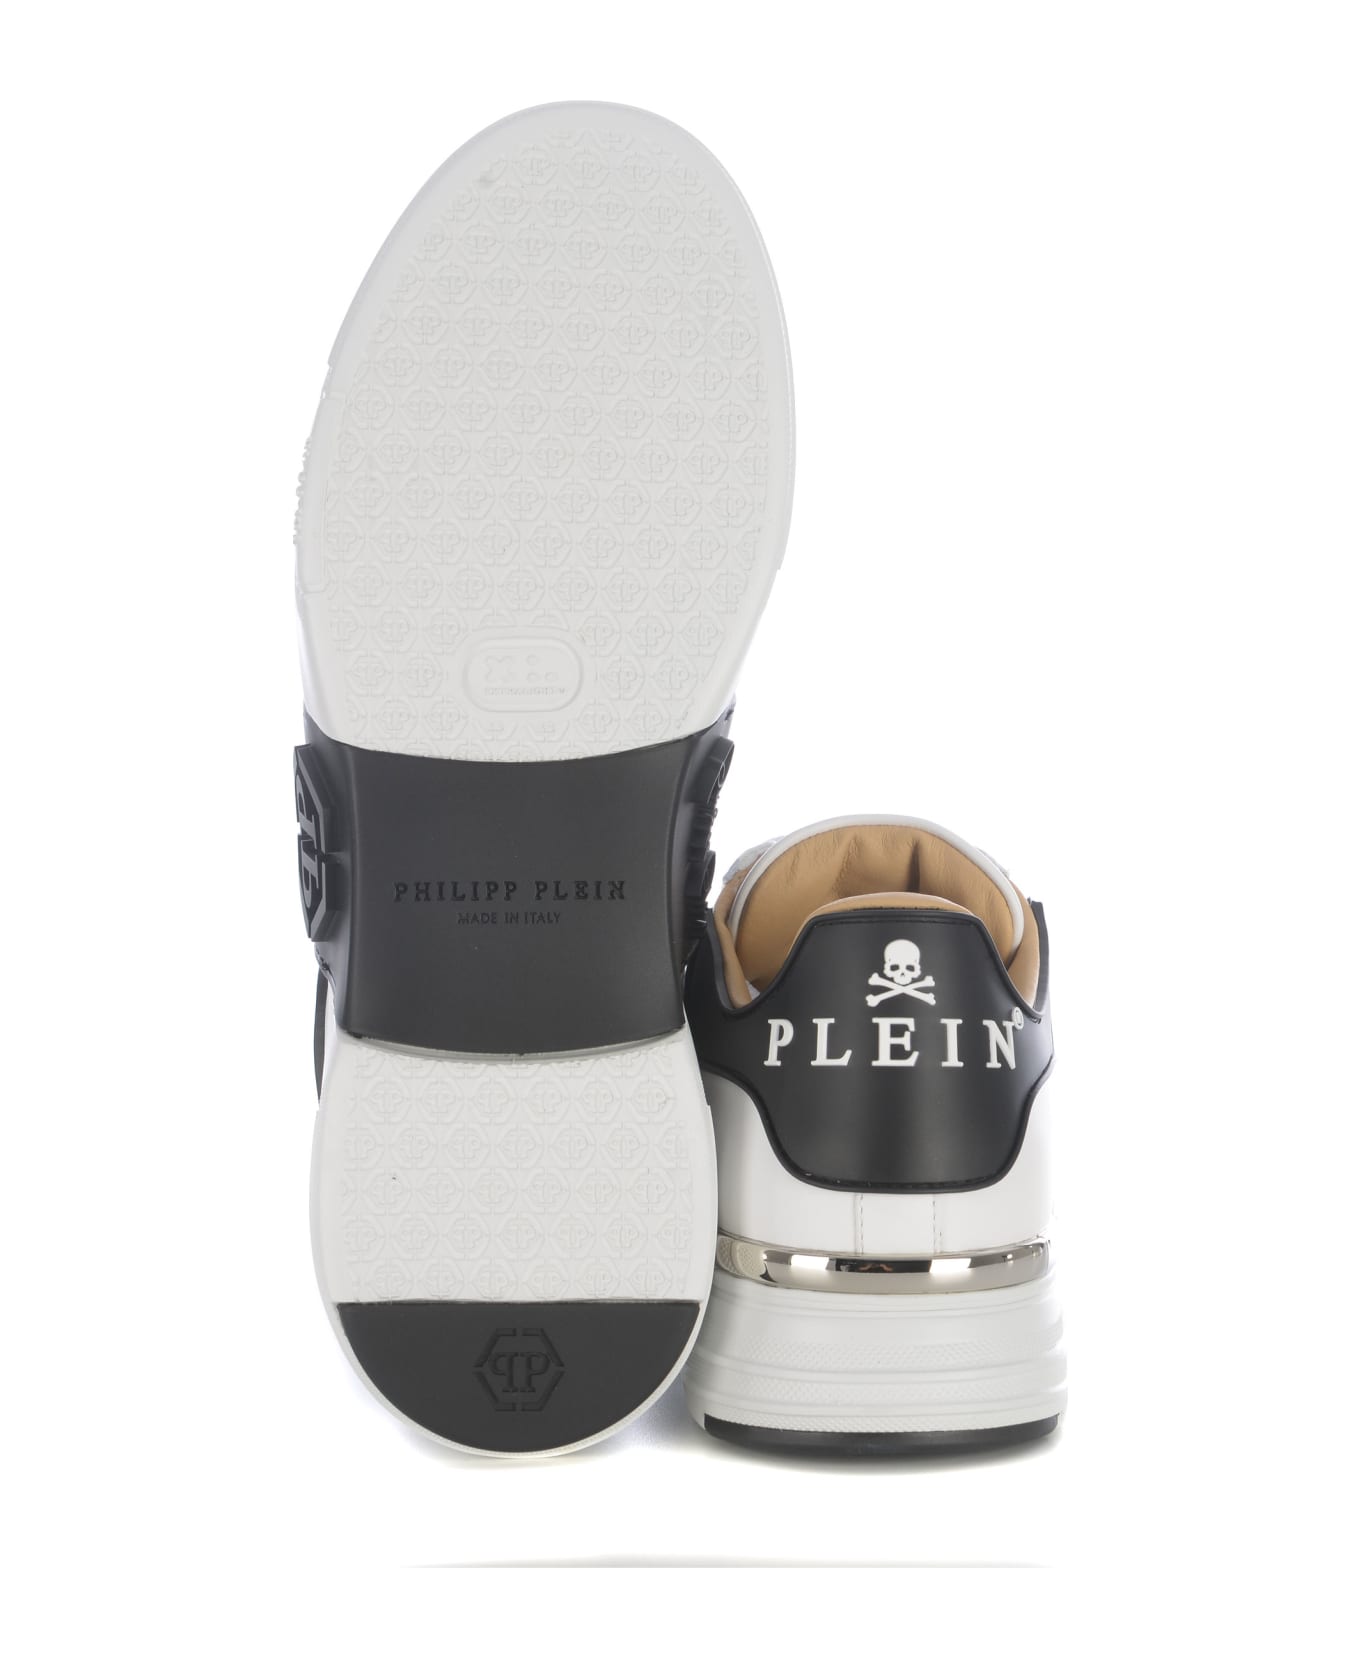 Philipp Plein Sneakers Philipp Plein "phantom" Made Of Leather - Bianco